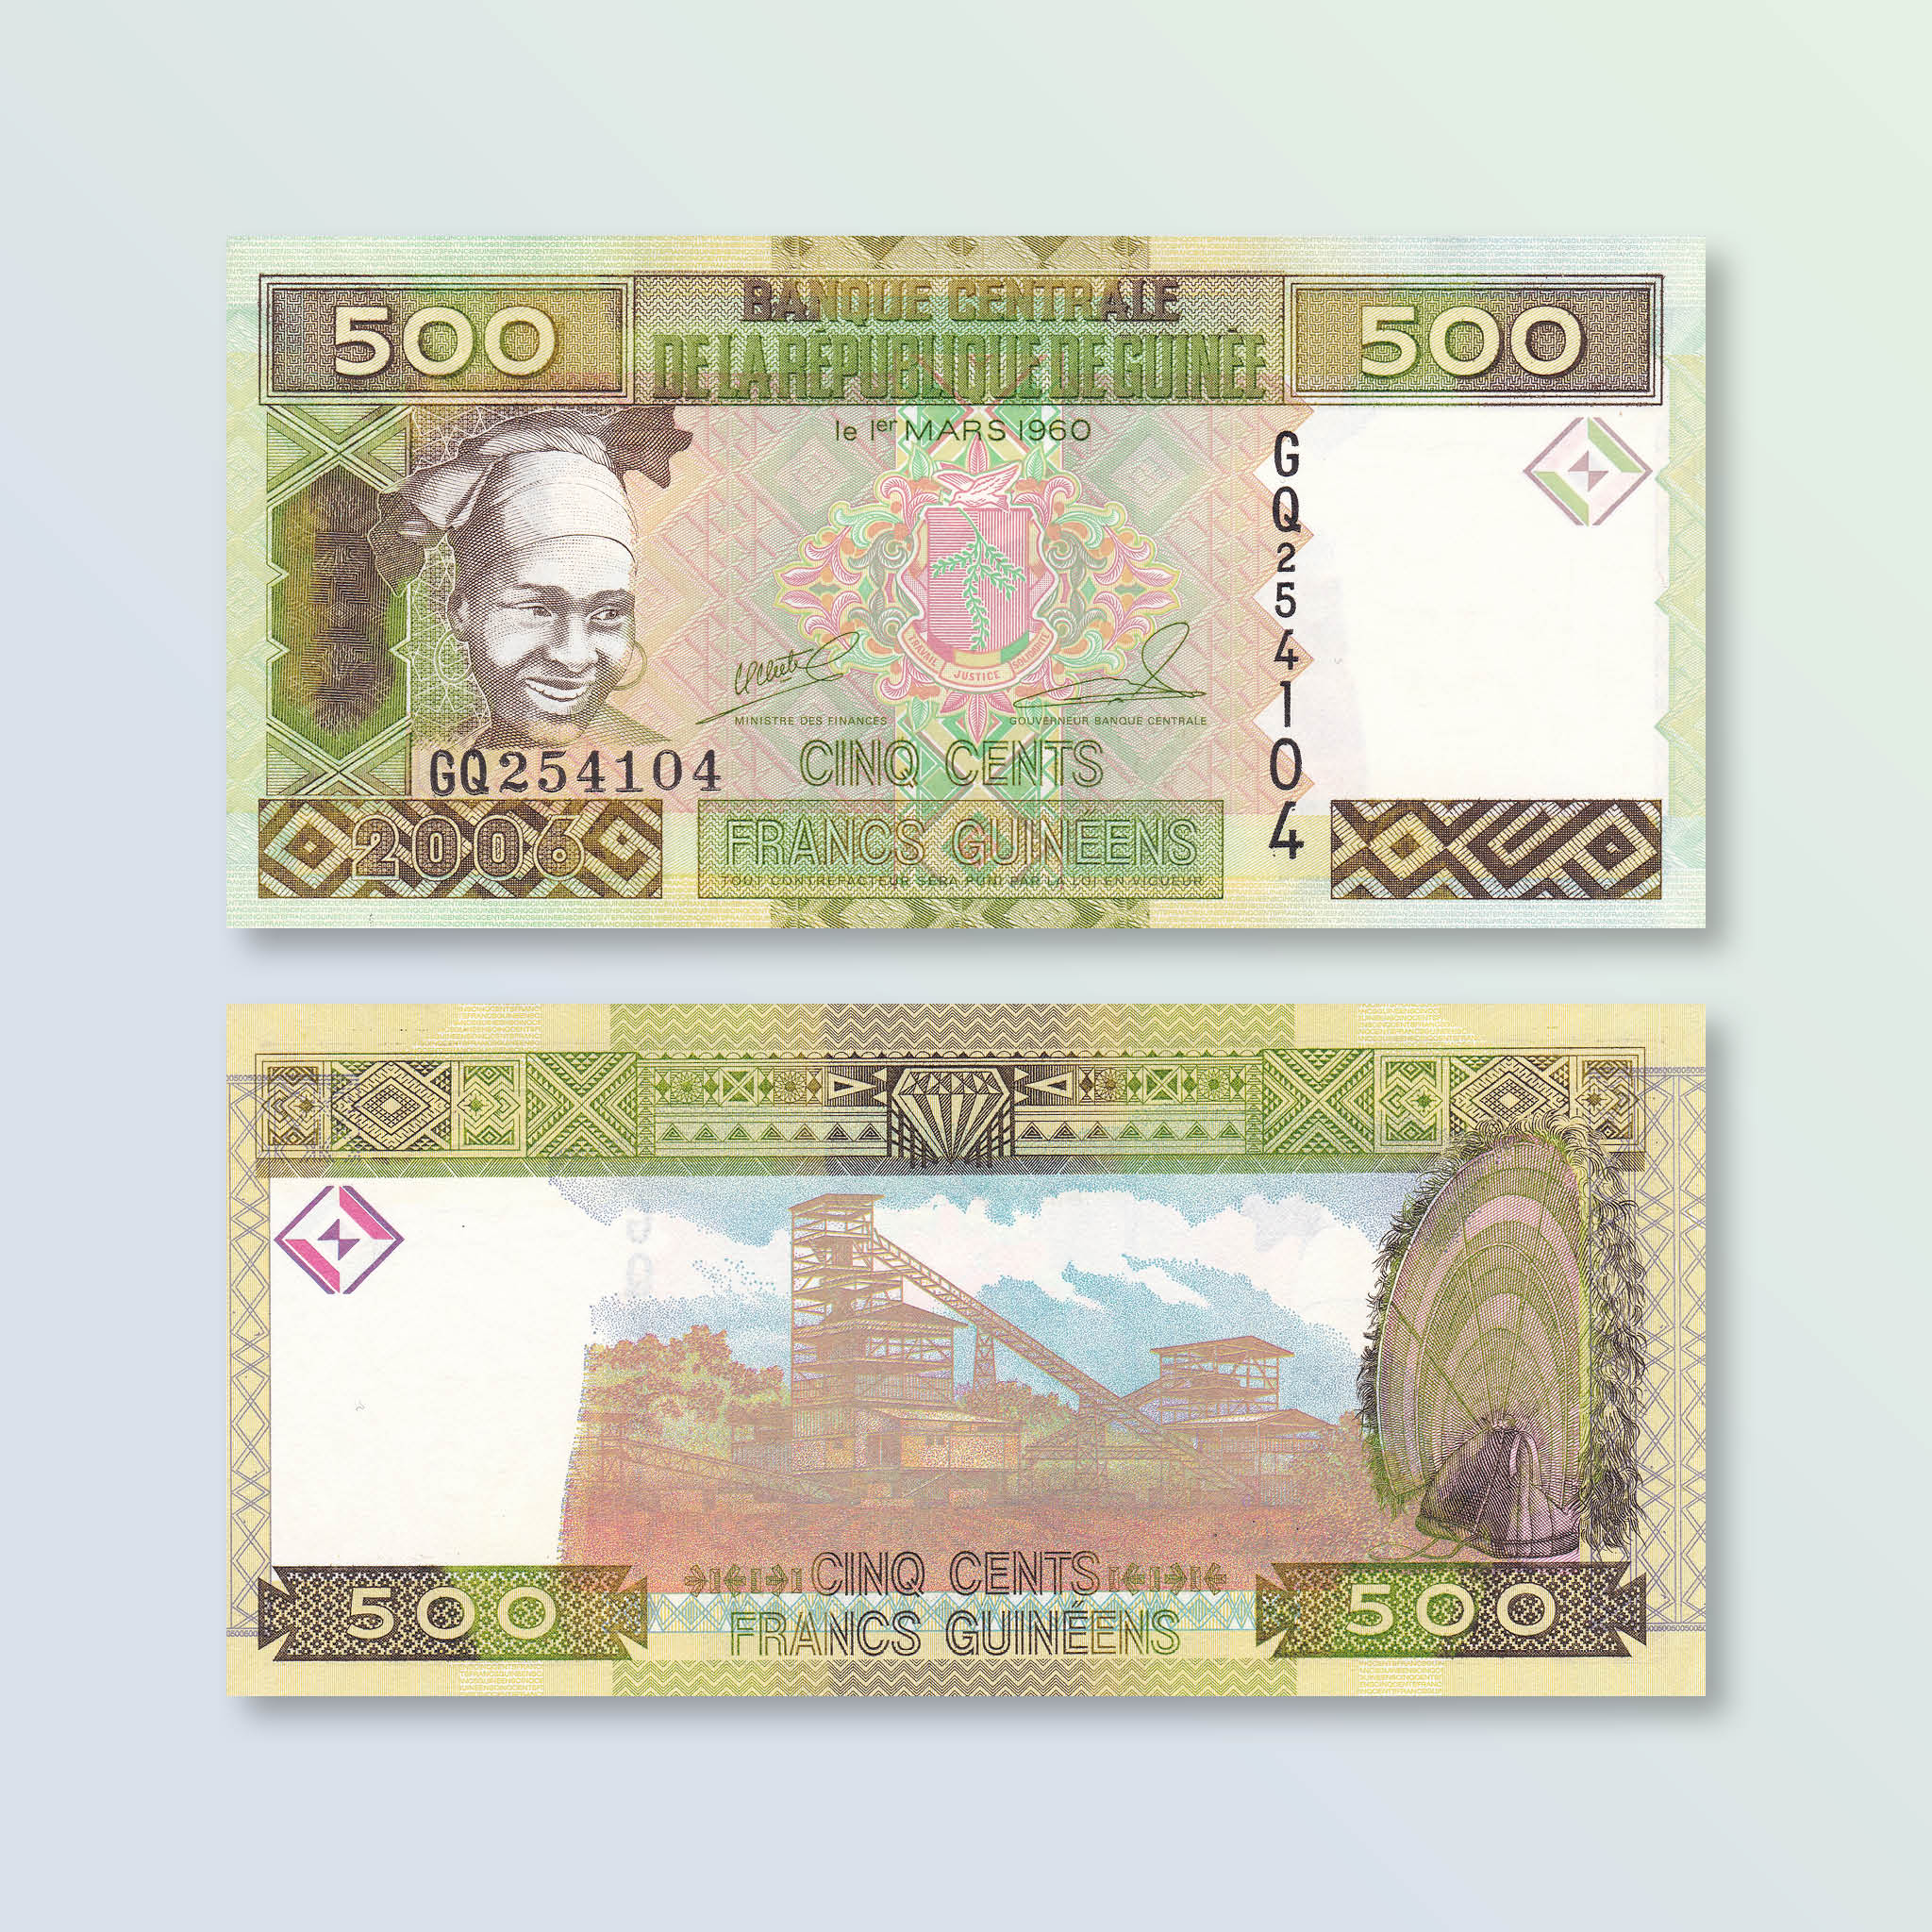 Guinea 500 Francs, 2006, B328a, P39a, UNC - Robert's World Money - World Banknotes